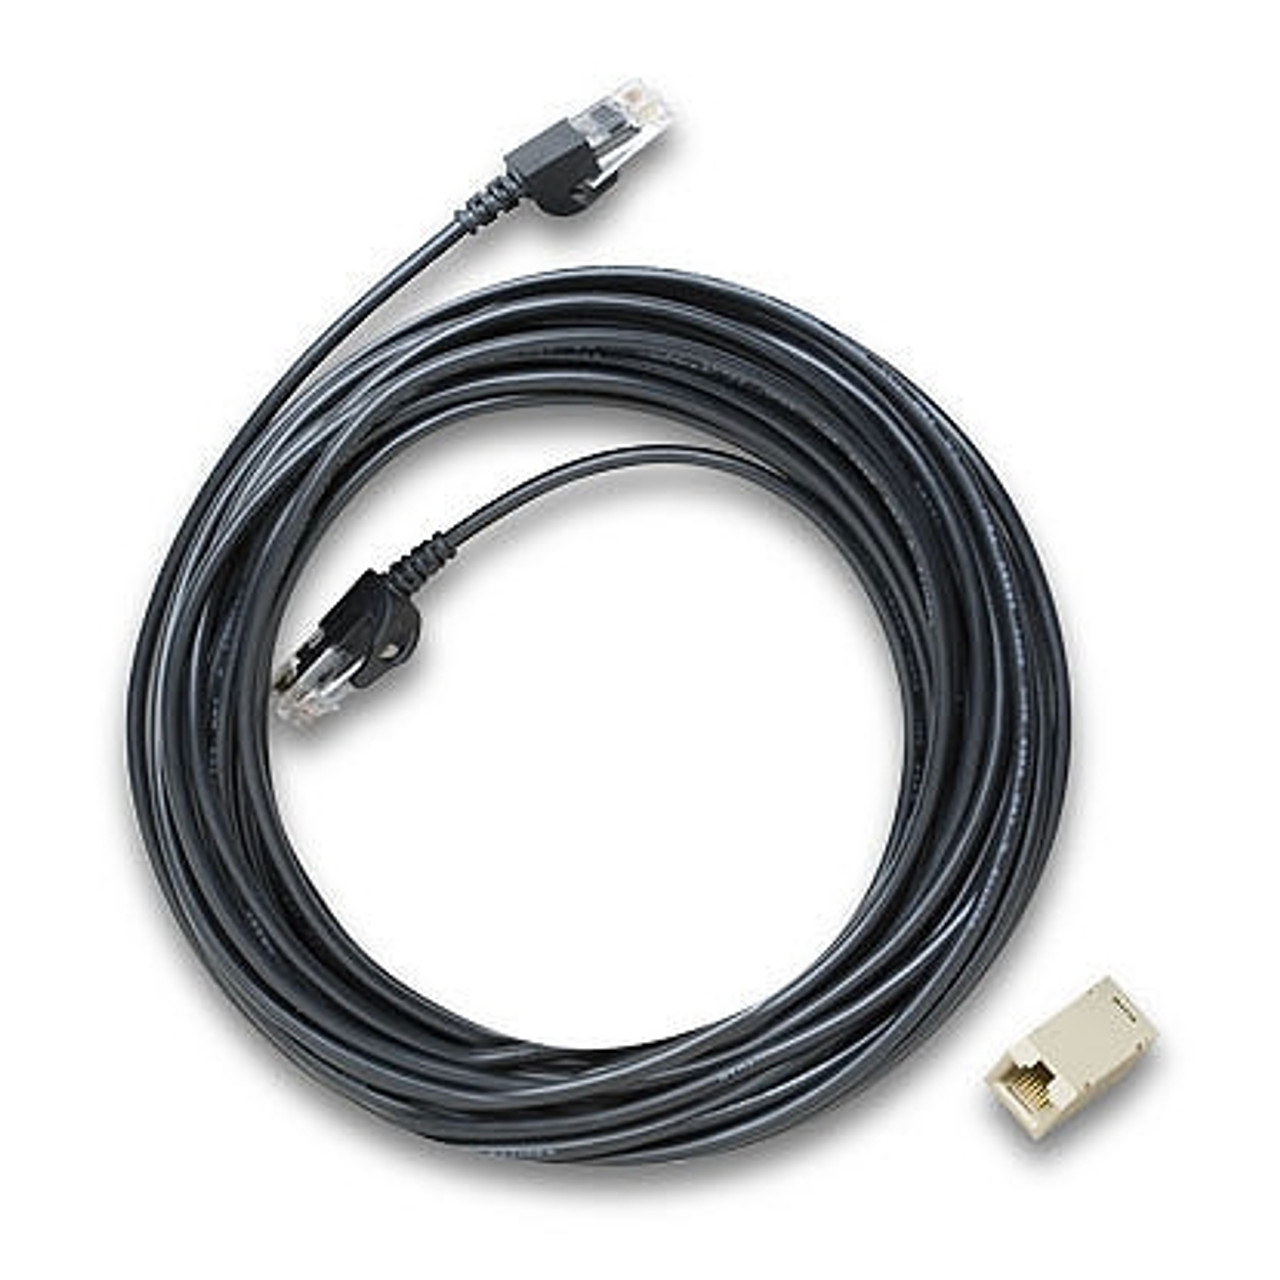 Onset 10m Smart Sensor Extension Cable - S-EXT-M010